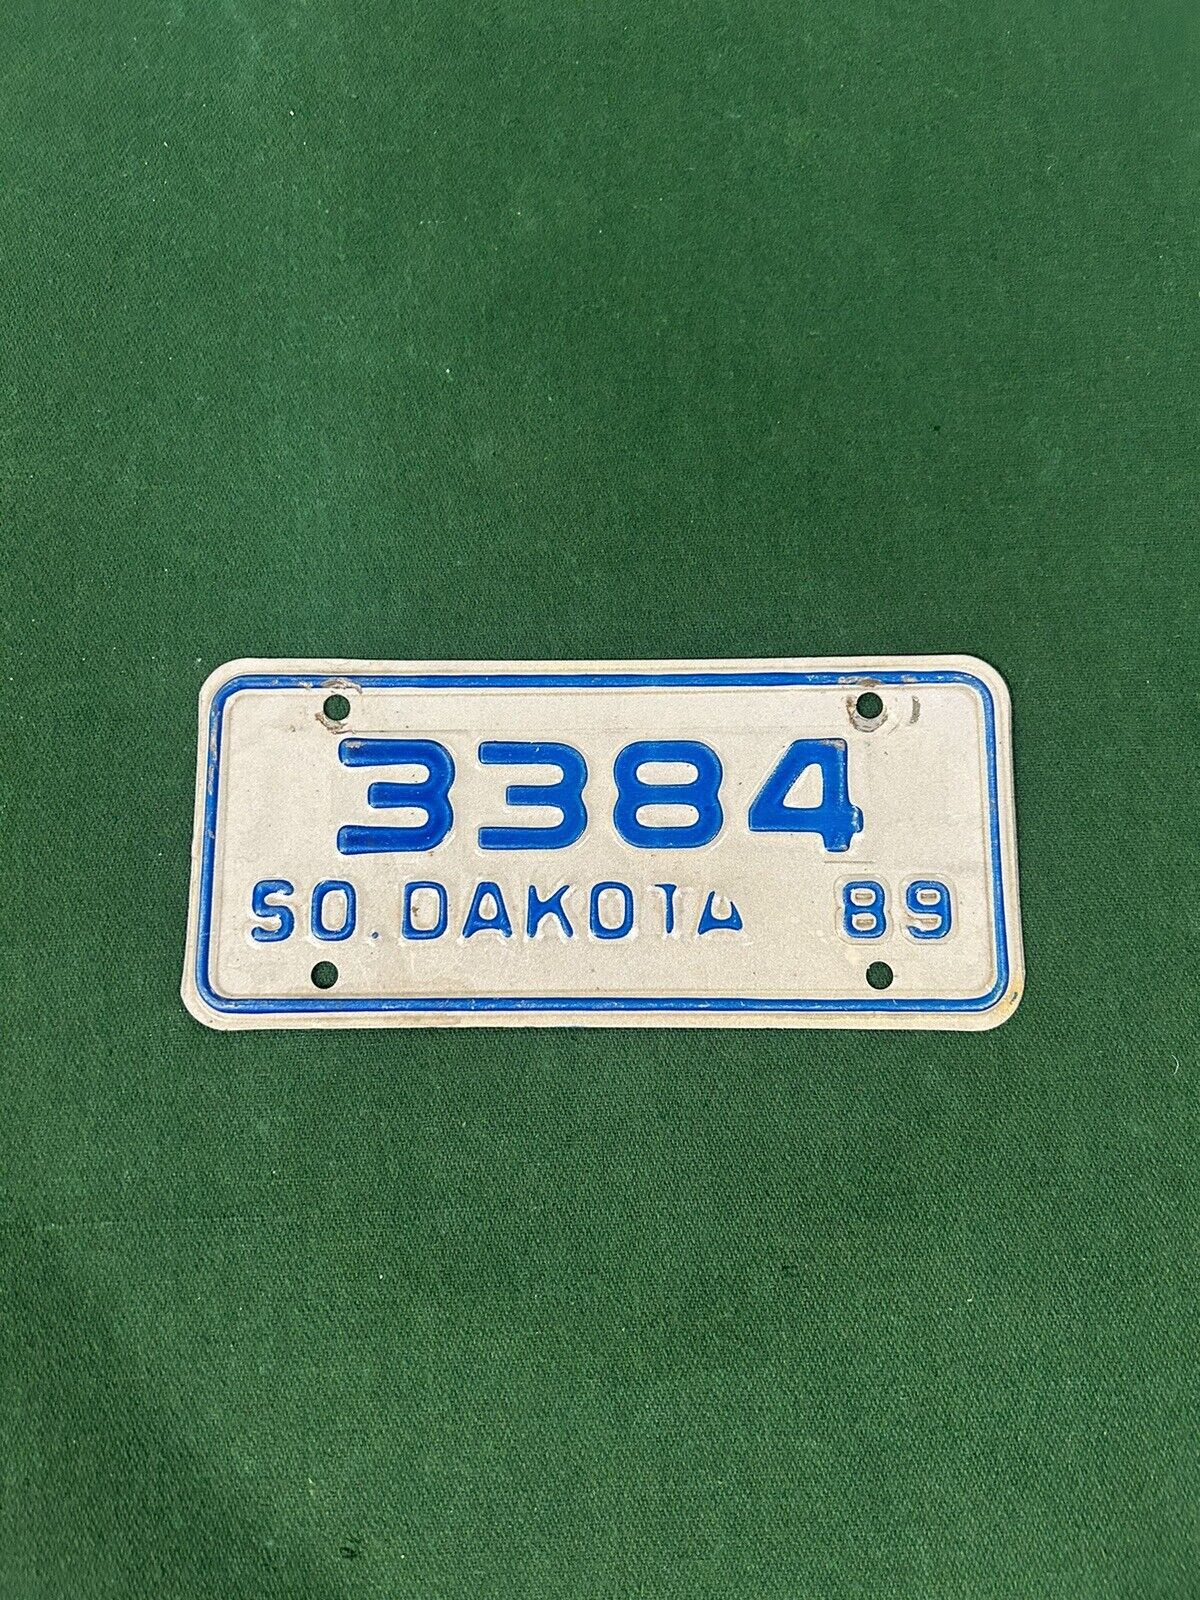 1989 South Dakota Motorcycle License Plate. # 3384